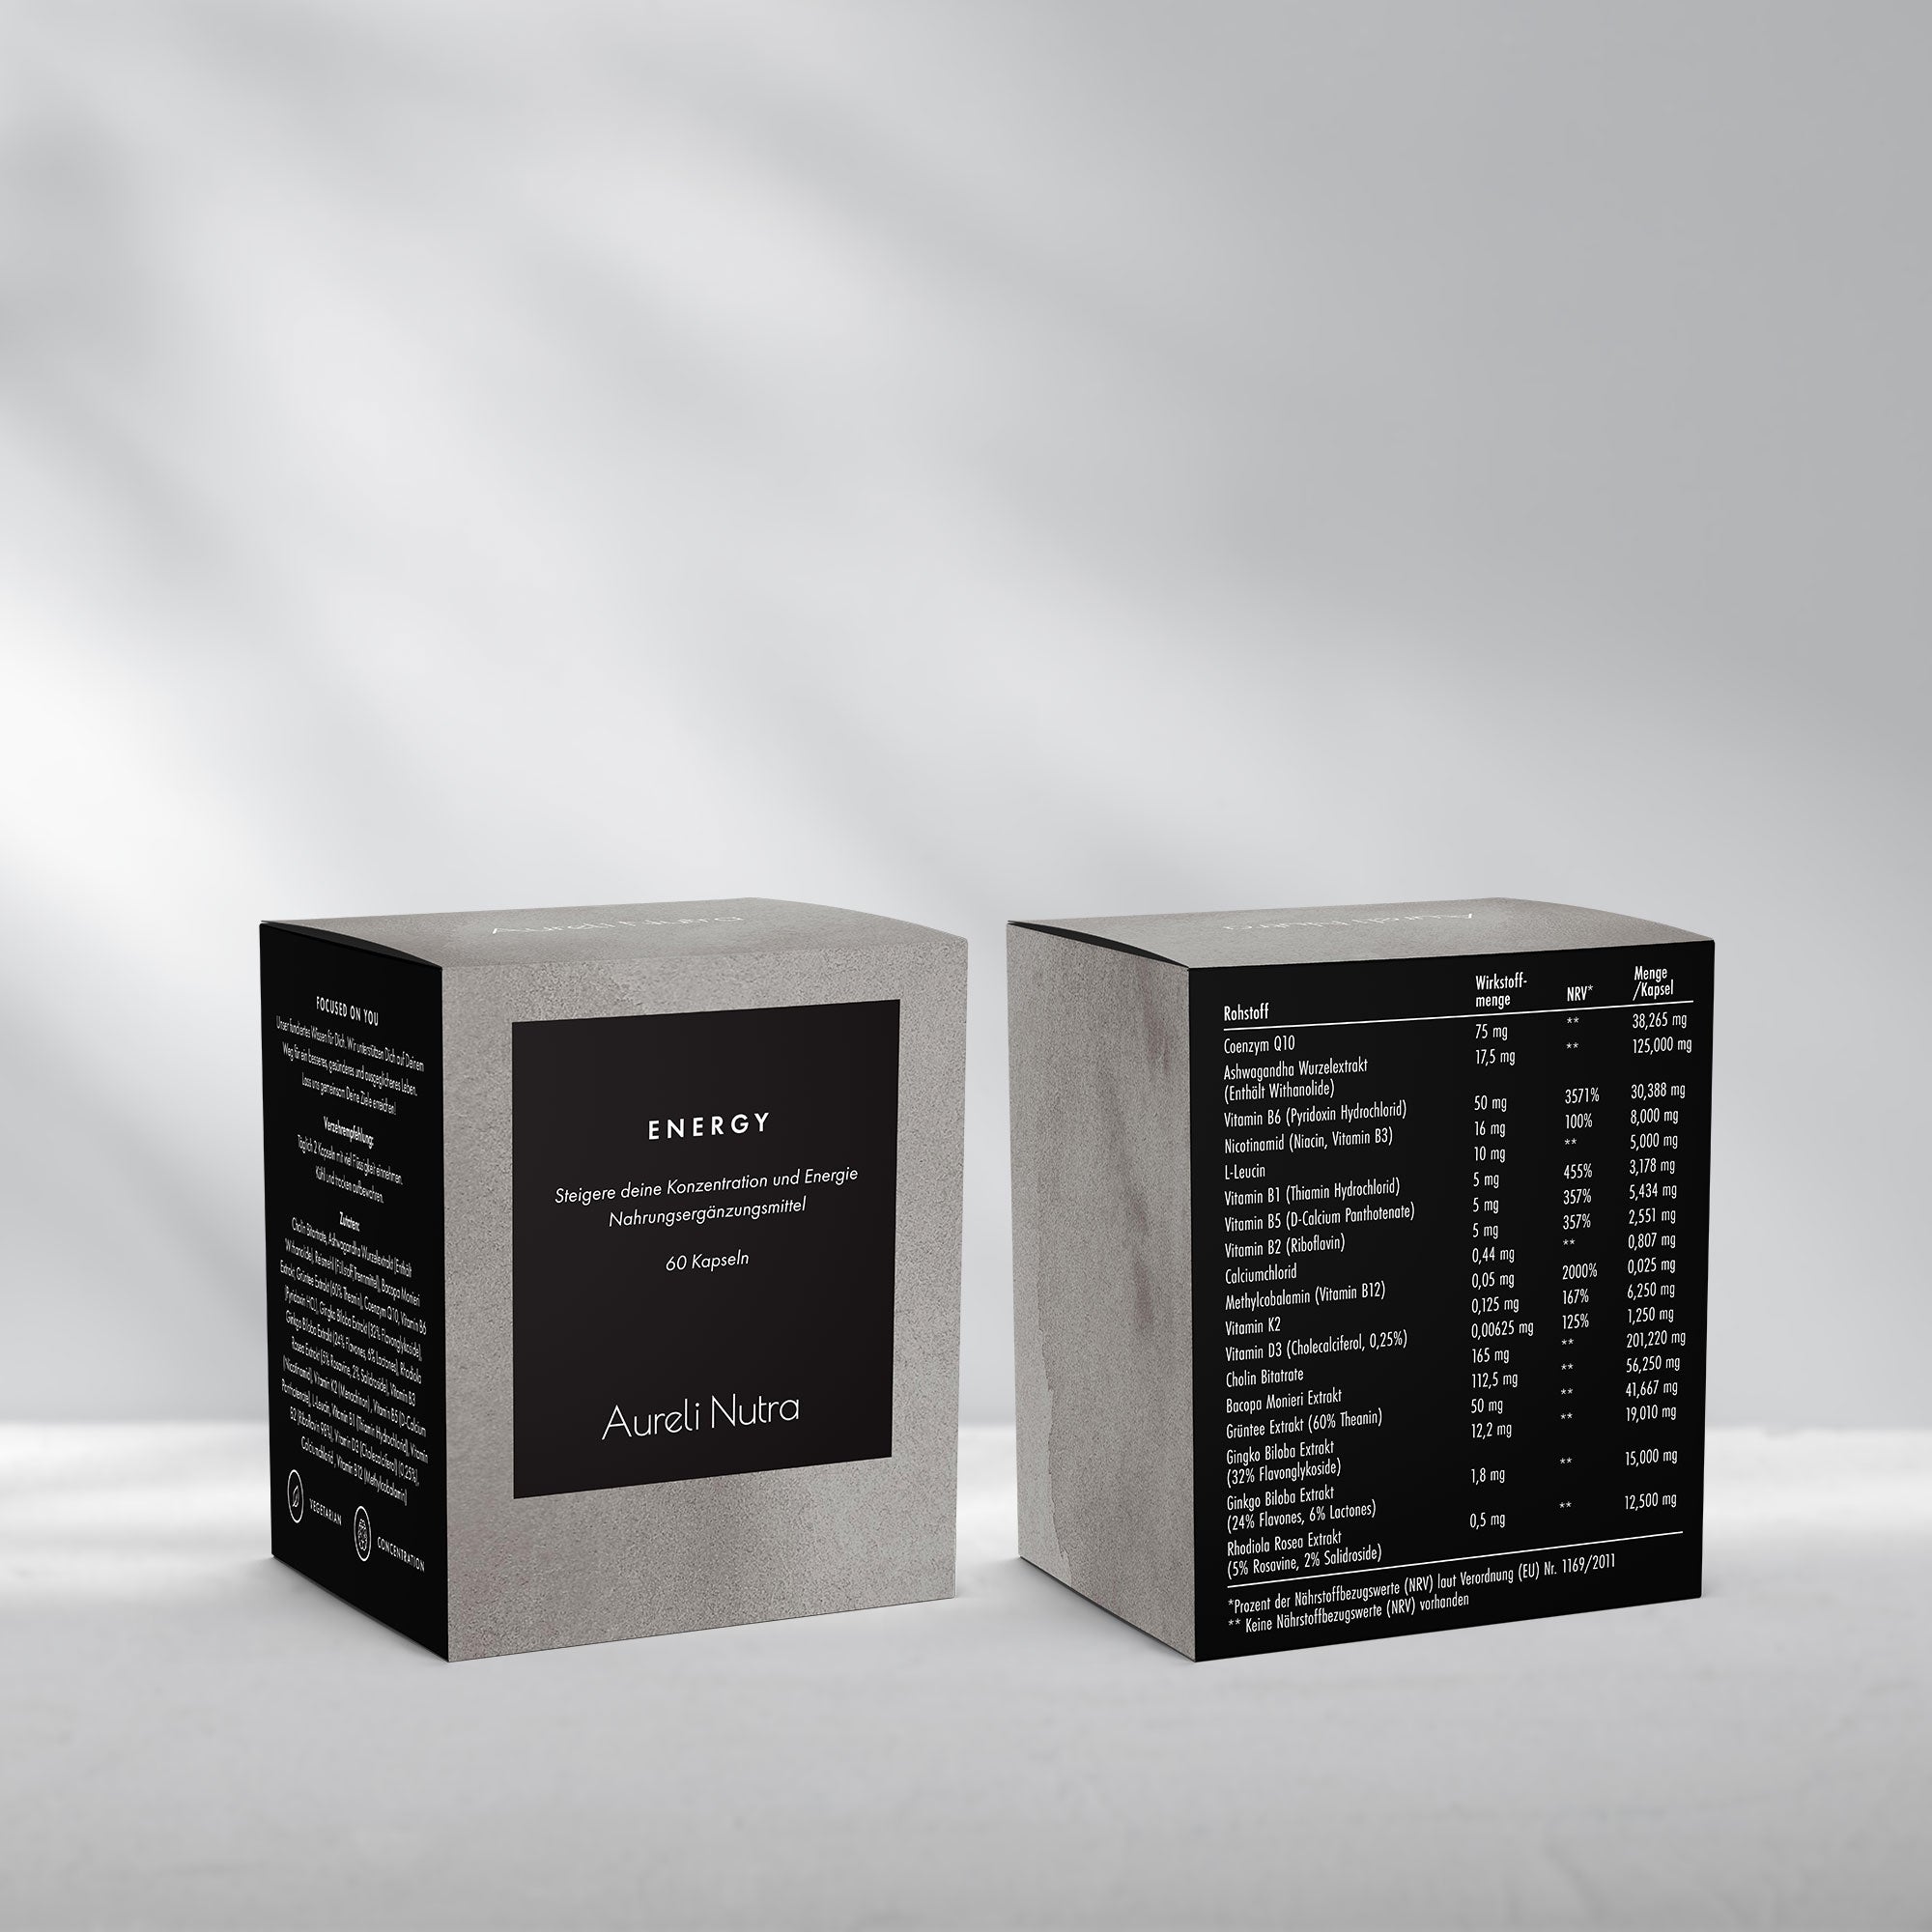 karolina krol studio aureli nutra natural health energy supplements minimalist illustrated packaging design